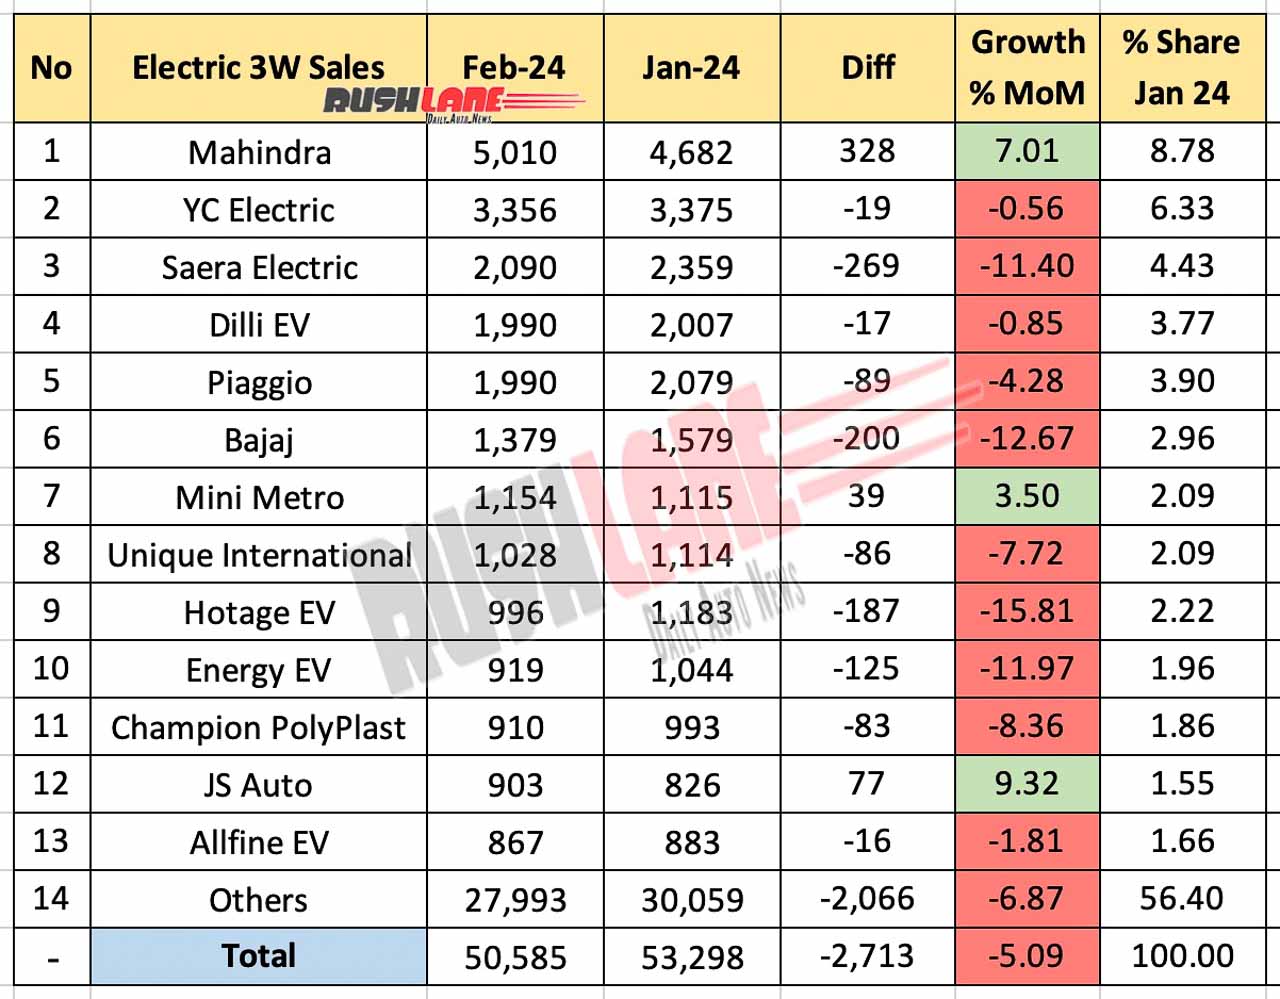 Electric 3W / Rickshaw Sales Feb 2024 vs Jan 2024 - MoM Comparison